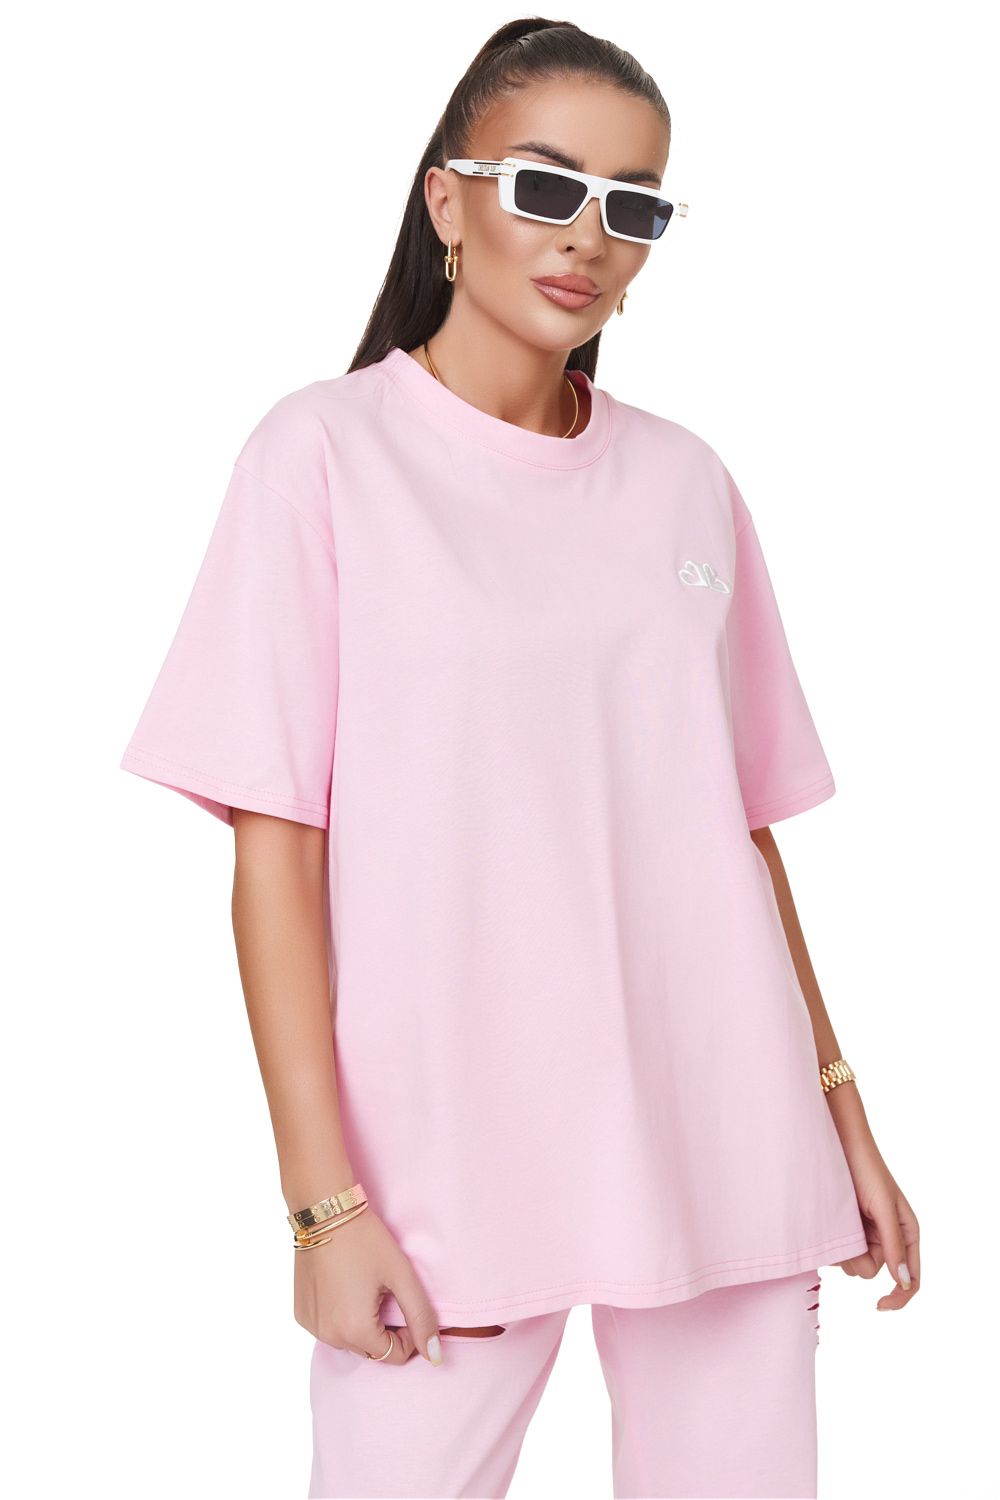 Cozila Bogas casual pink ladies t-shirt